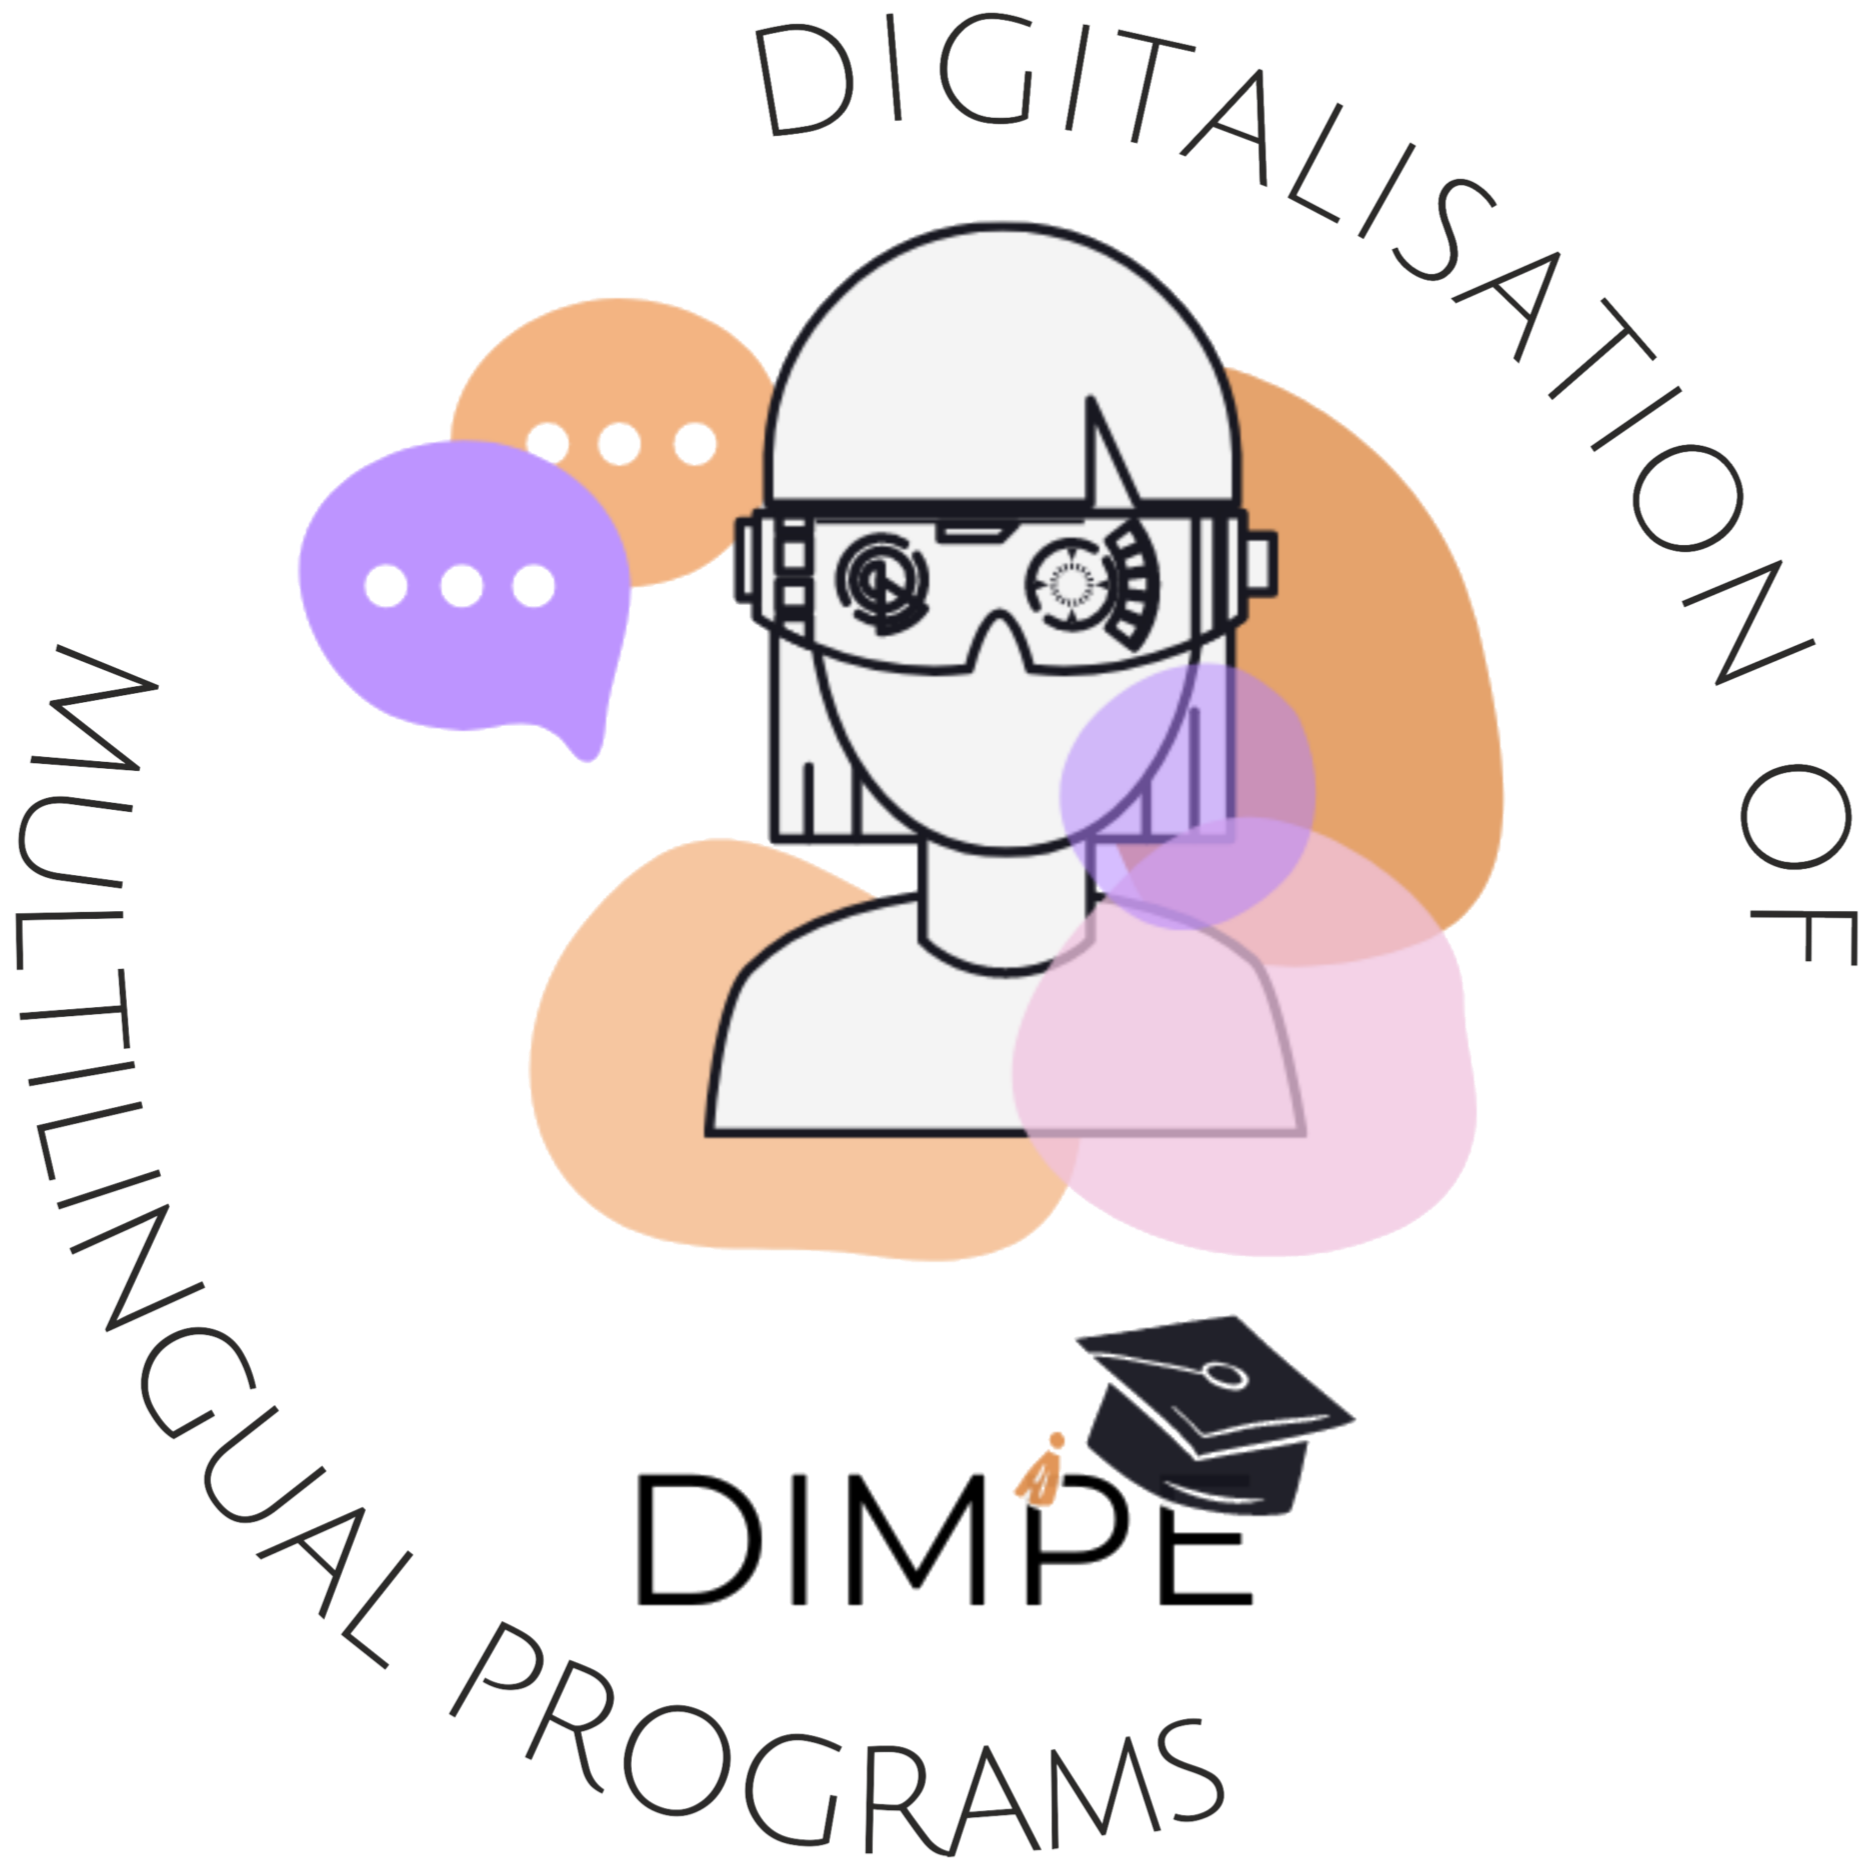 DIMPE logo